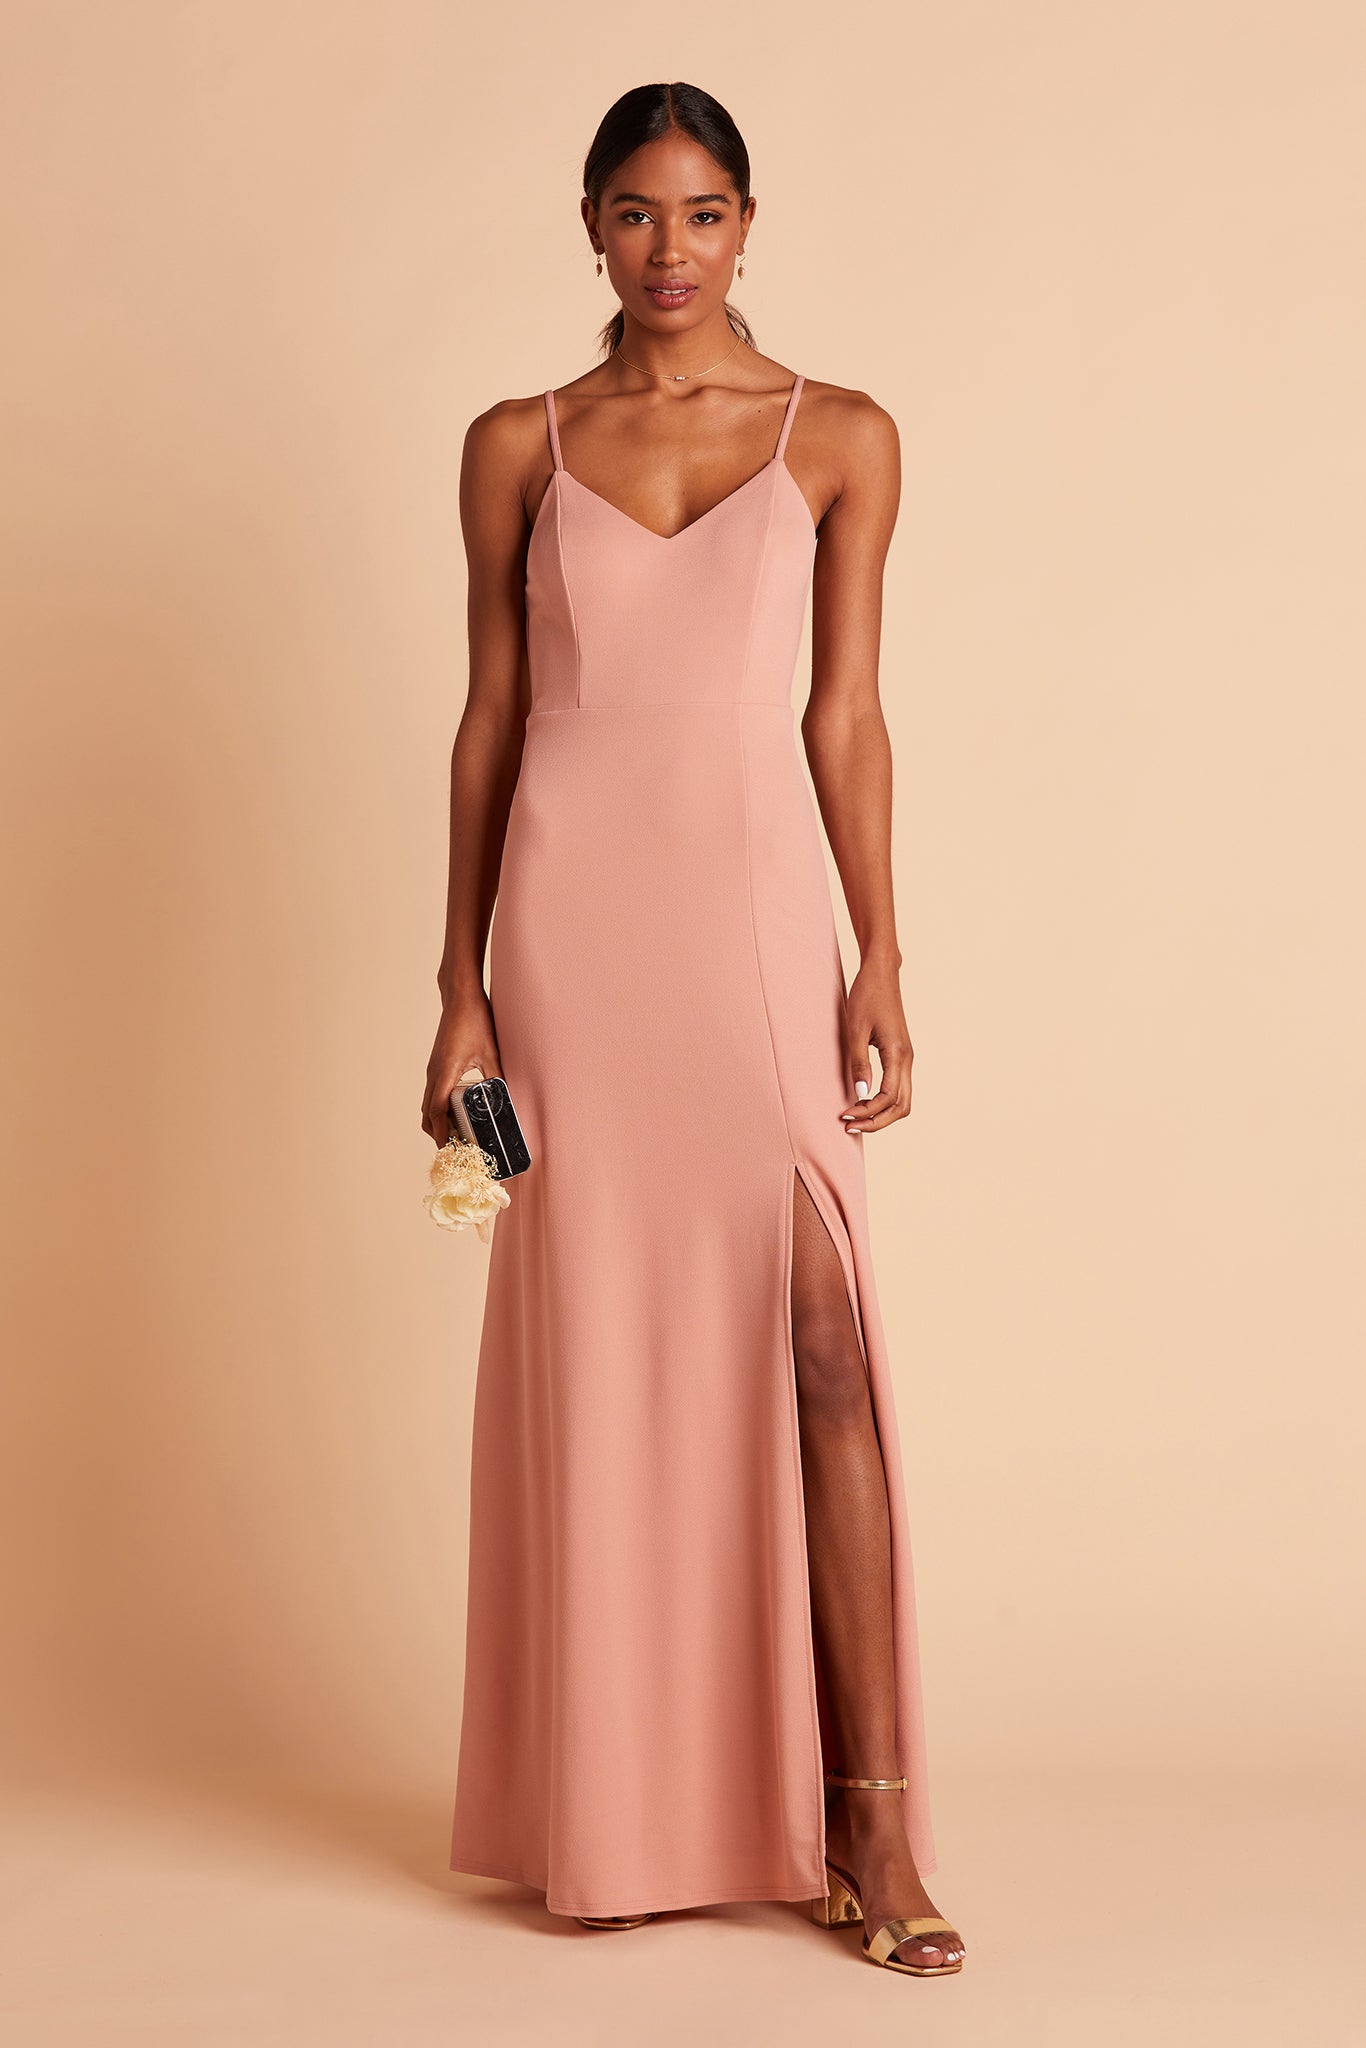 Dusty Rose Dress - Ruched Mesh Dress - Off-the-Shoulder Dress - Lulus